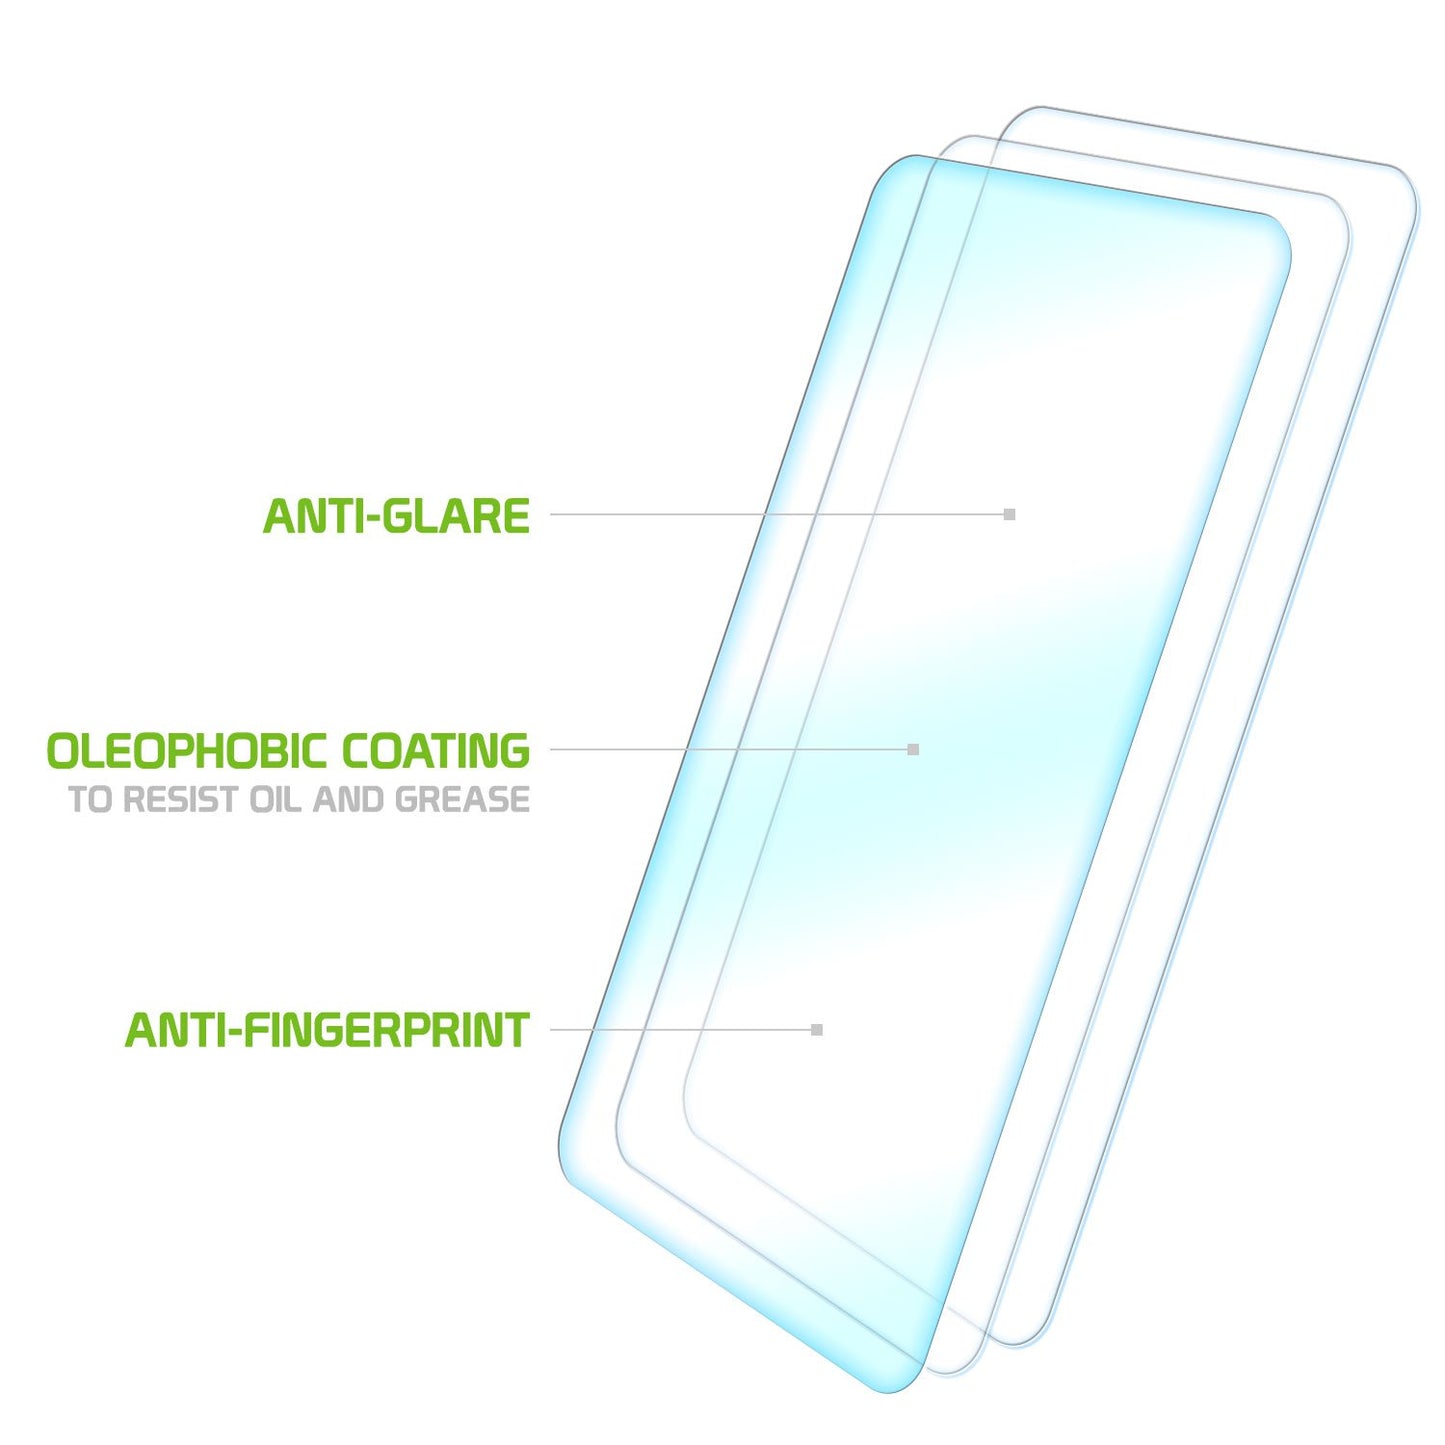 SAIPHXSM -Anti Glare Screen Protector, 9H Tempered Glass - iPhone XS Max